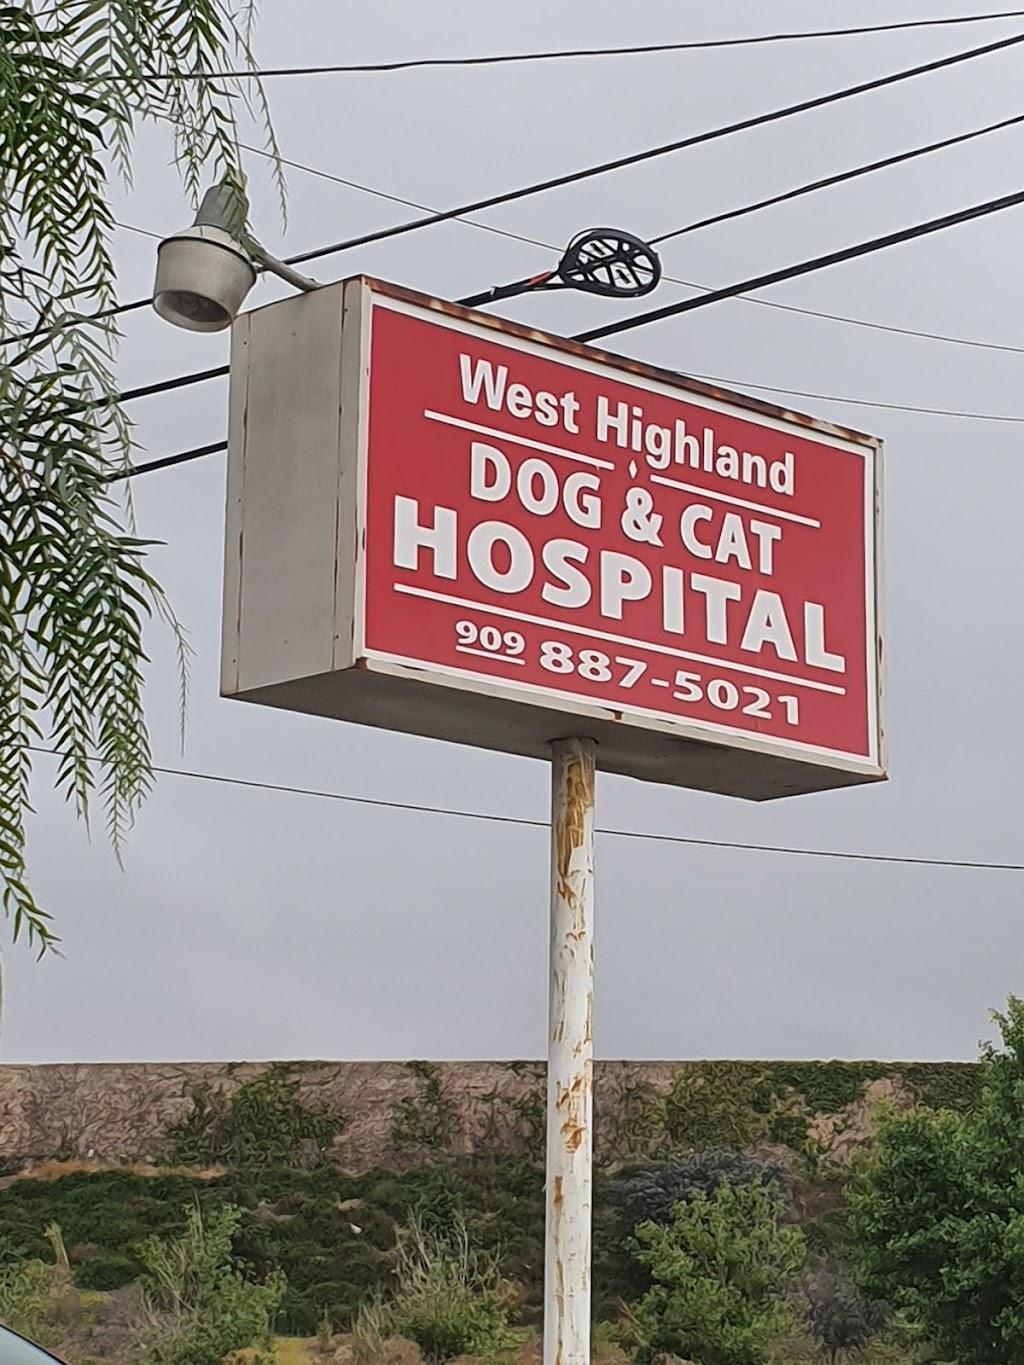 West Highland Dog & Cat Hospital | 1795 W Highland Ave, San Bernardino, CA 92411, USA | Phone: (909) 887-5021